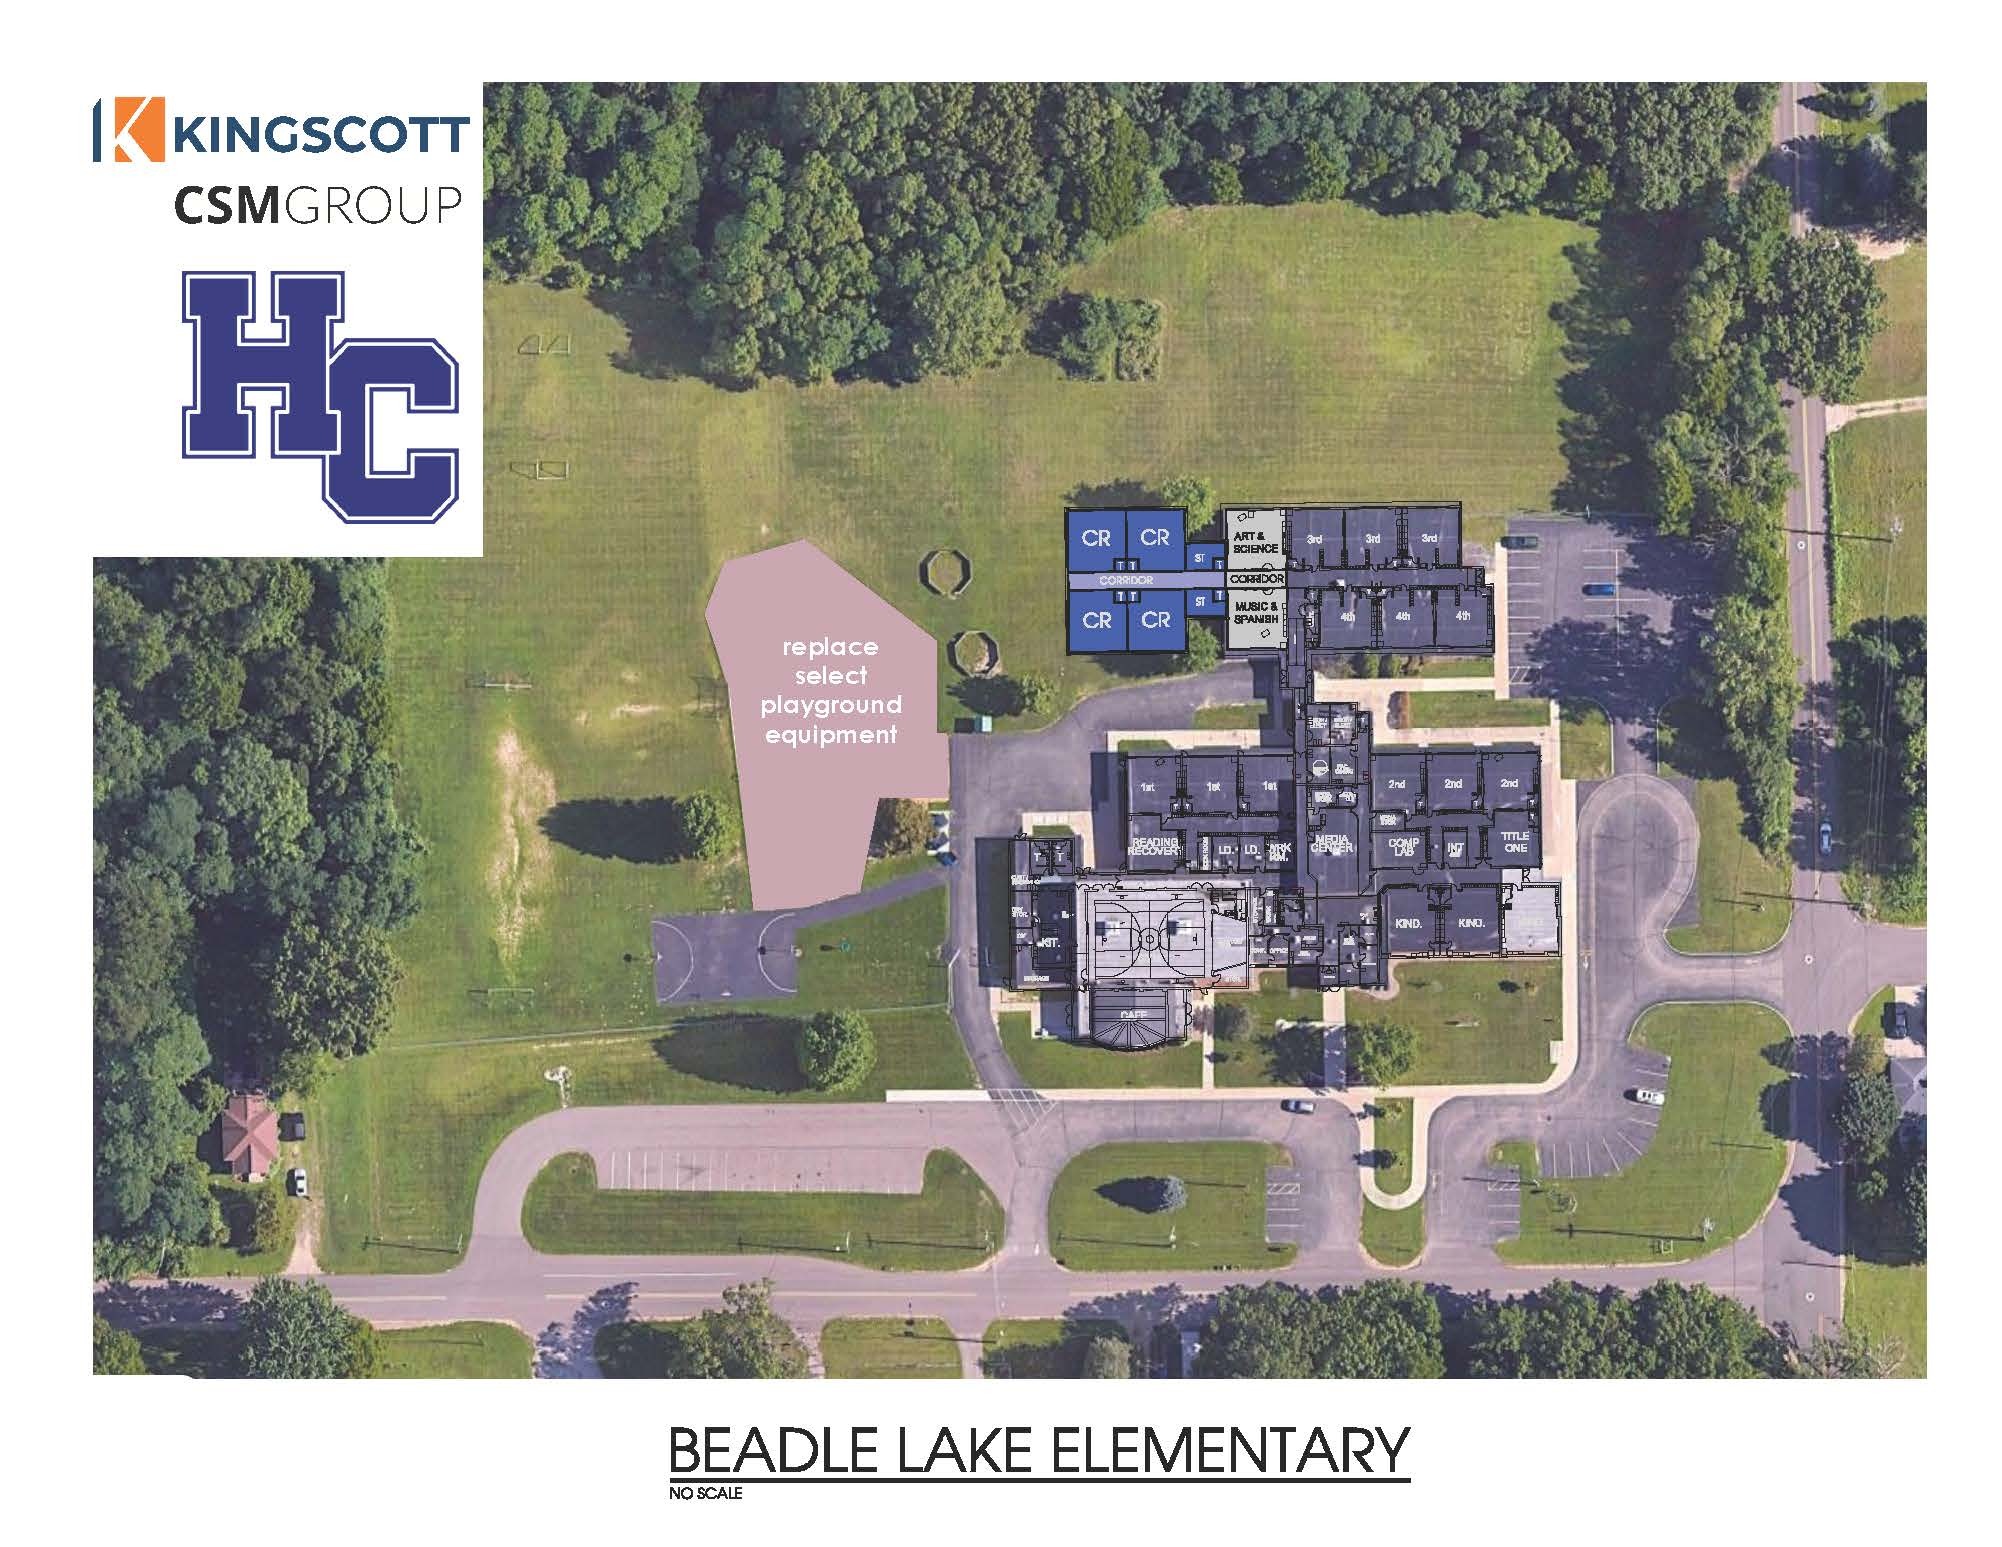 Proposed addition to Beadle Lake Elementary